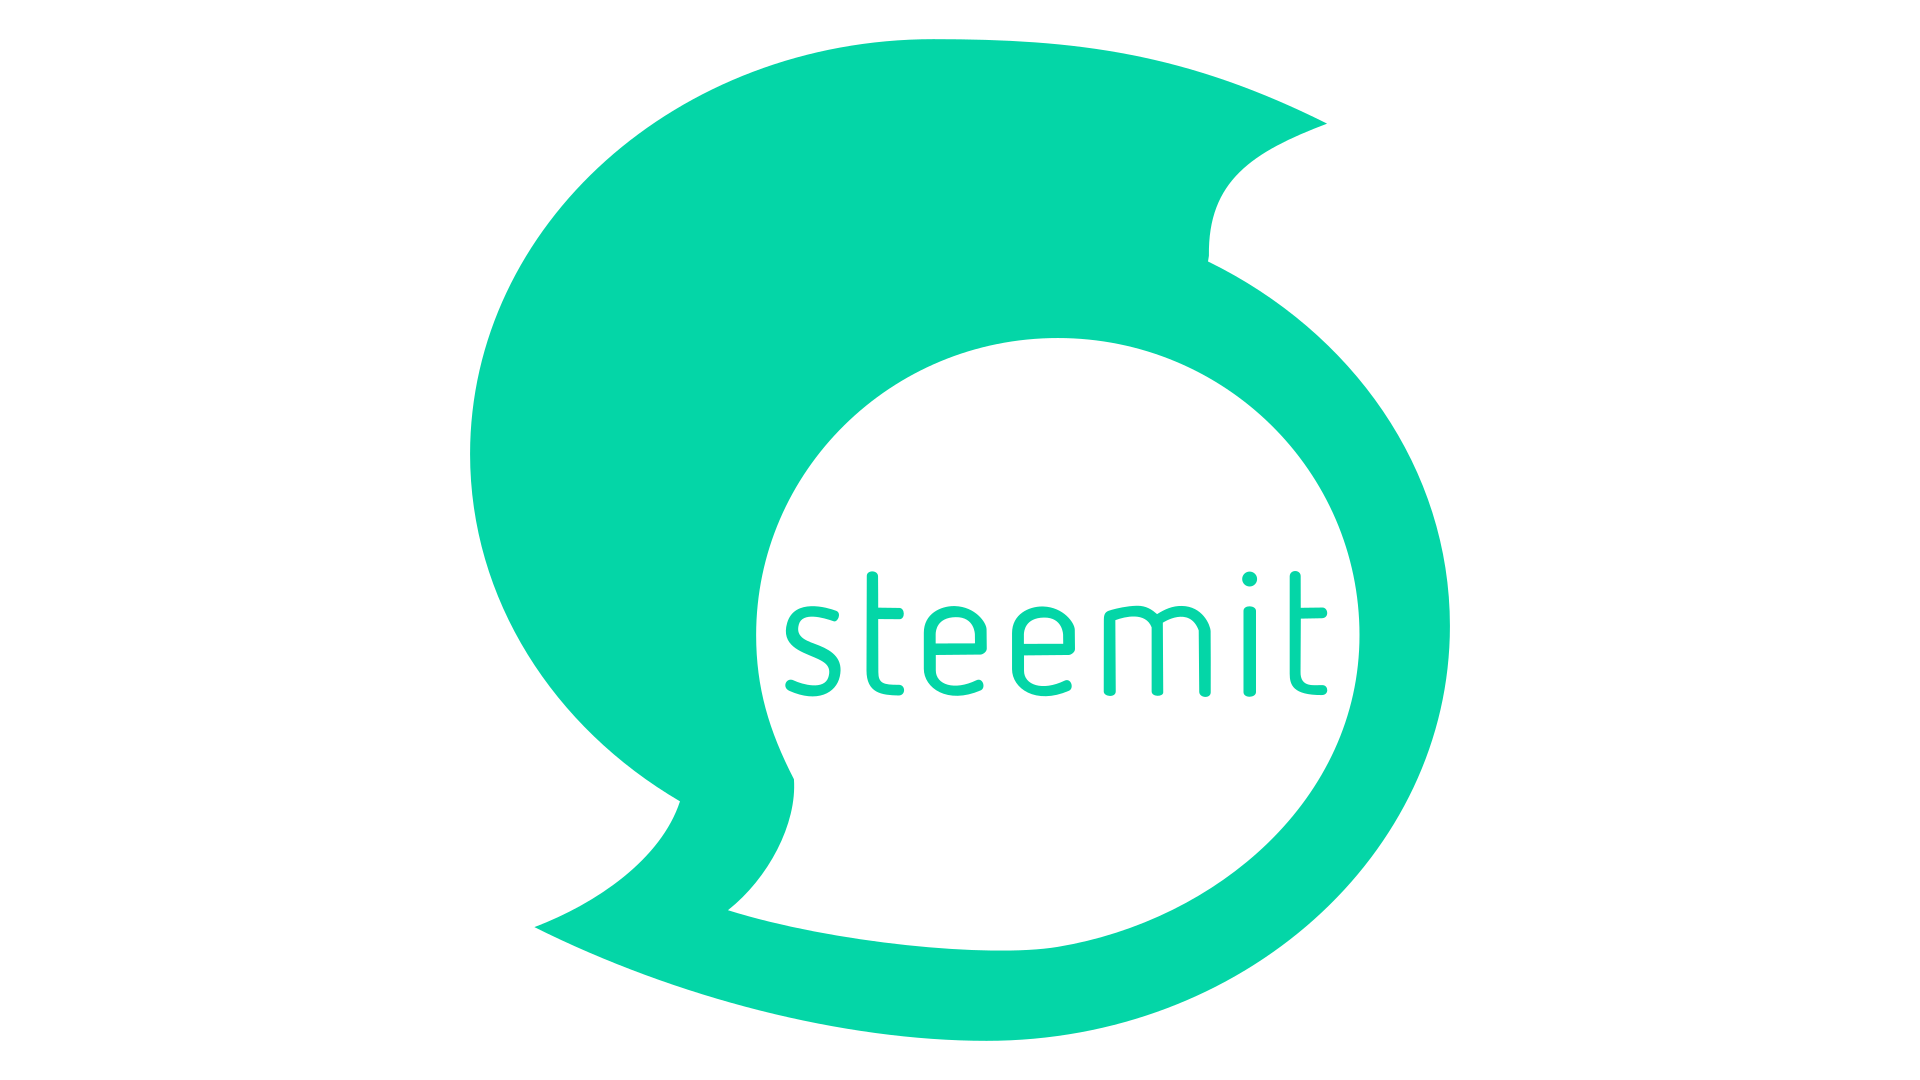 New Steemit logo.png